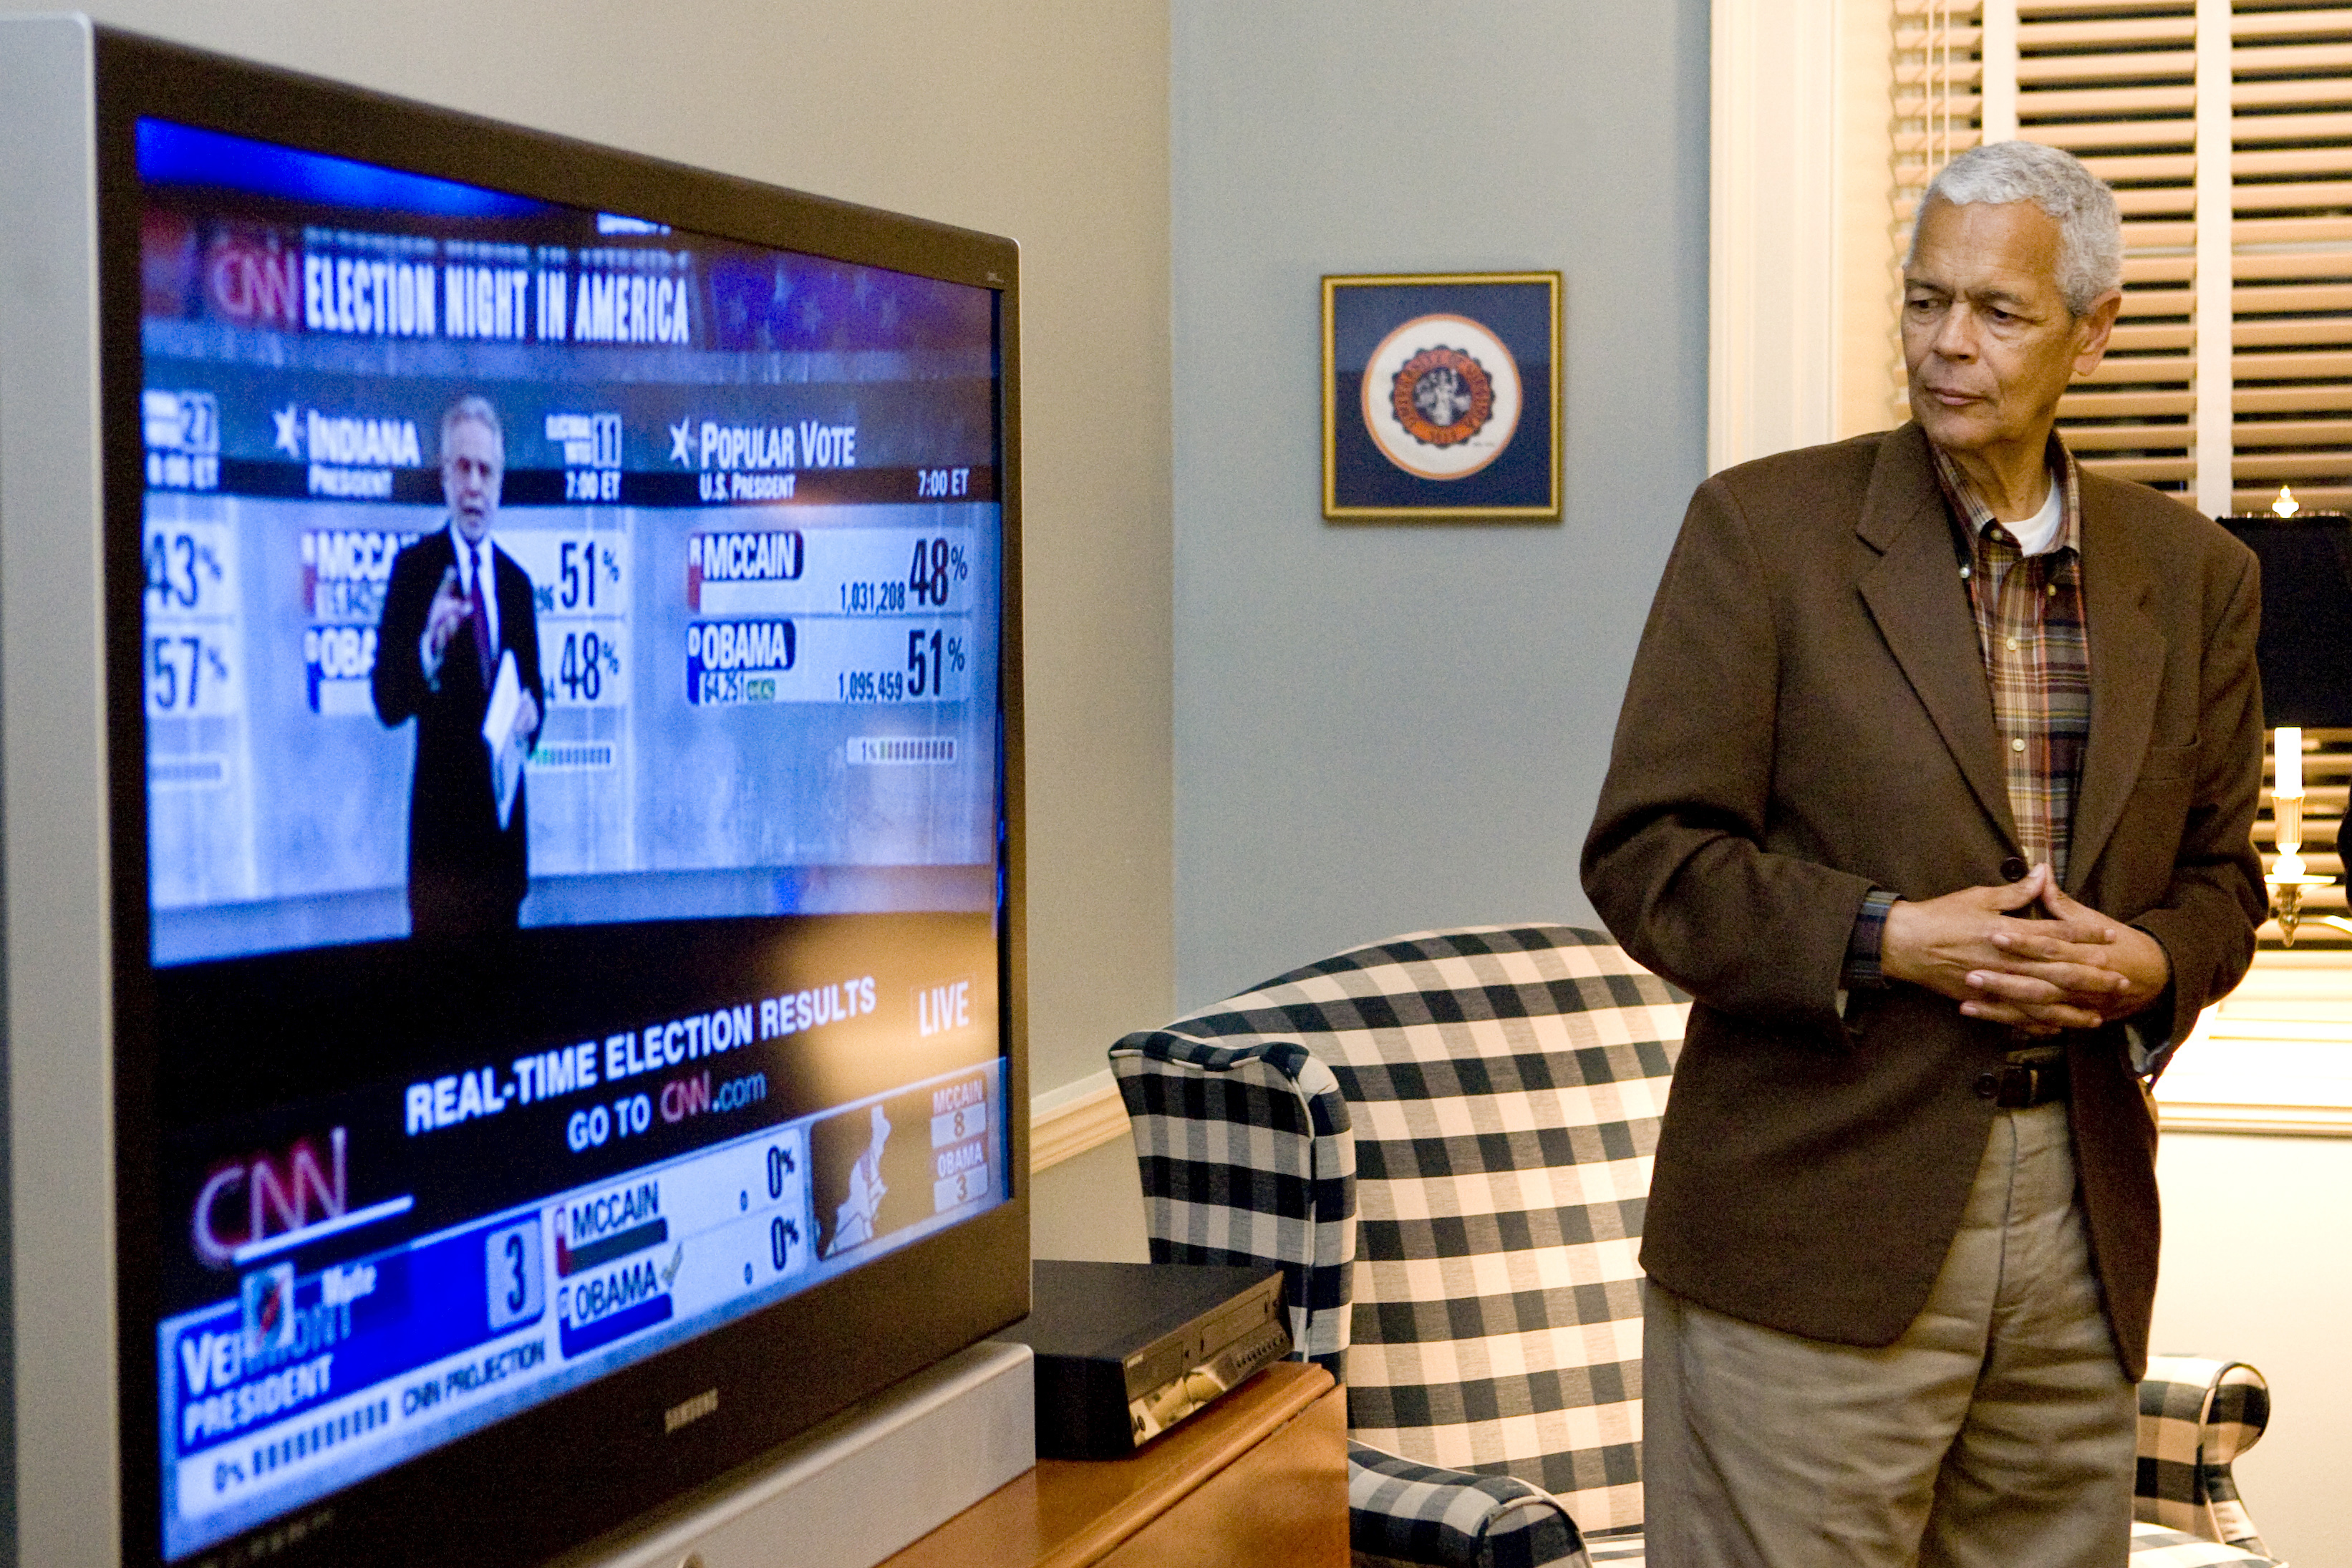 Julian Bond standing watching a CNN news broadcast of a presidential election